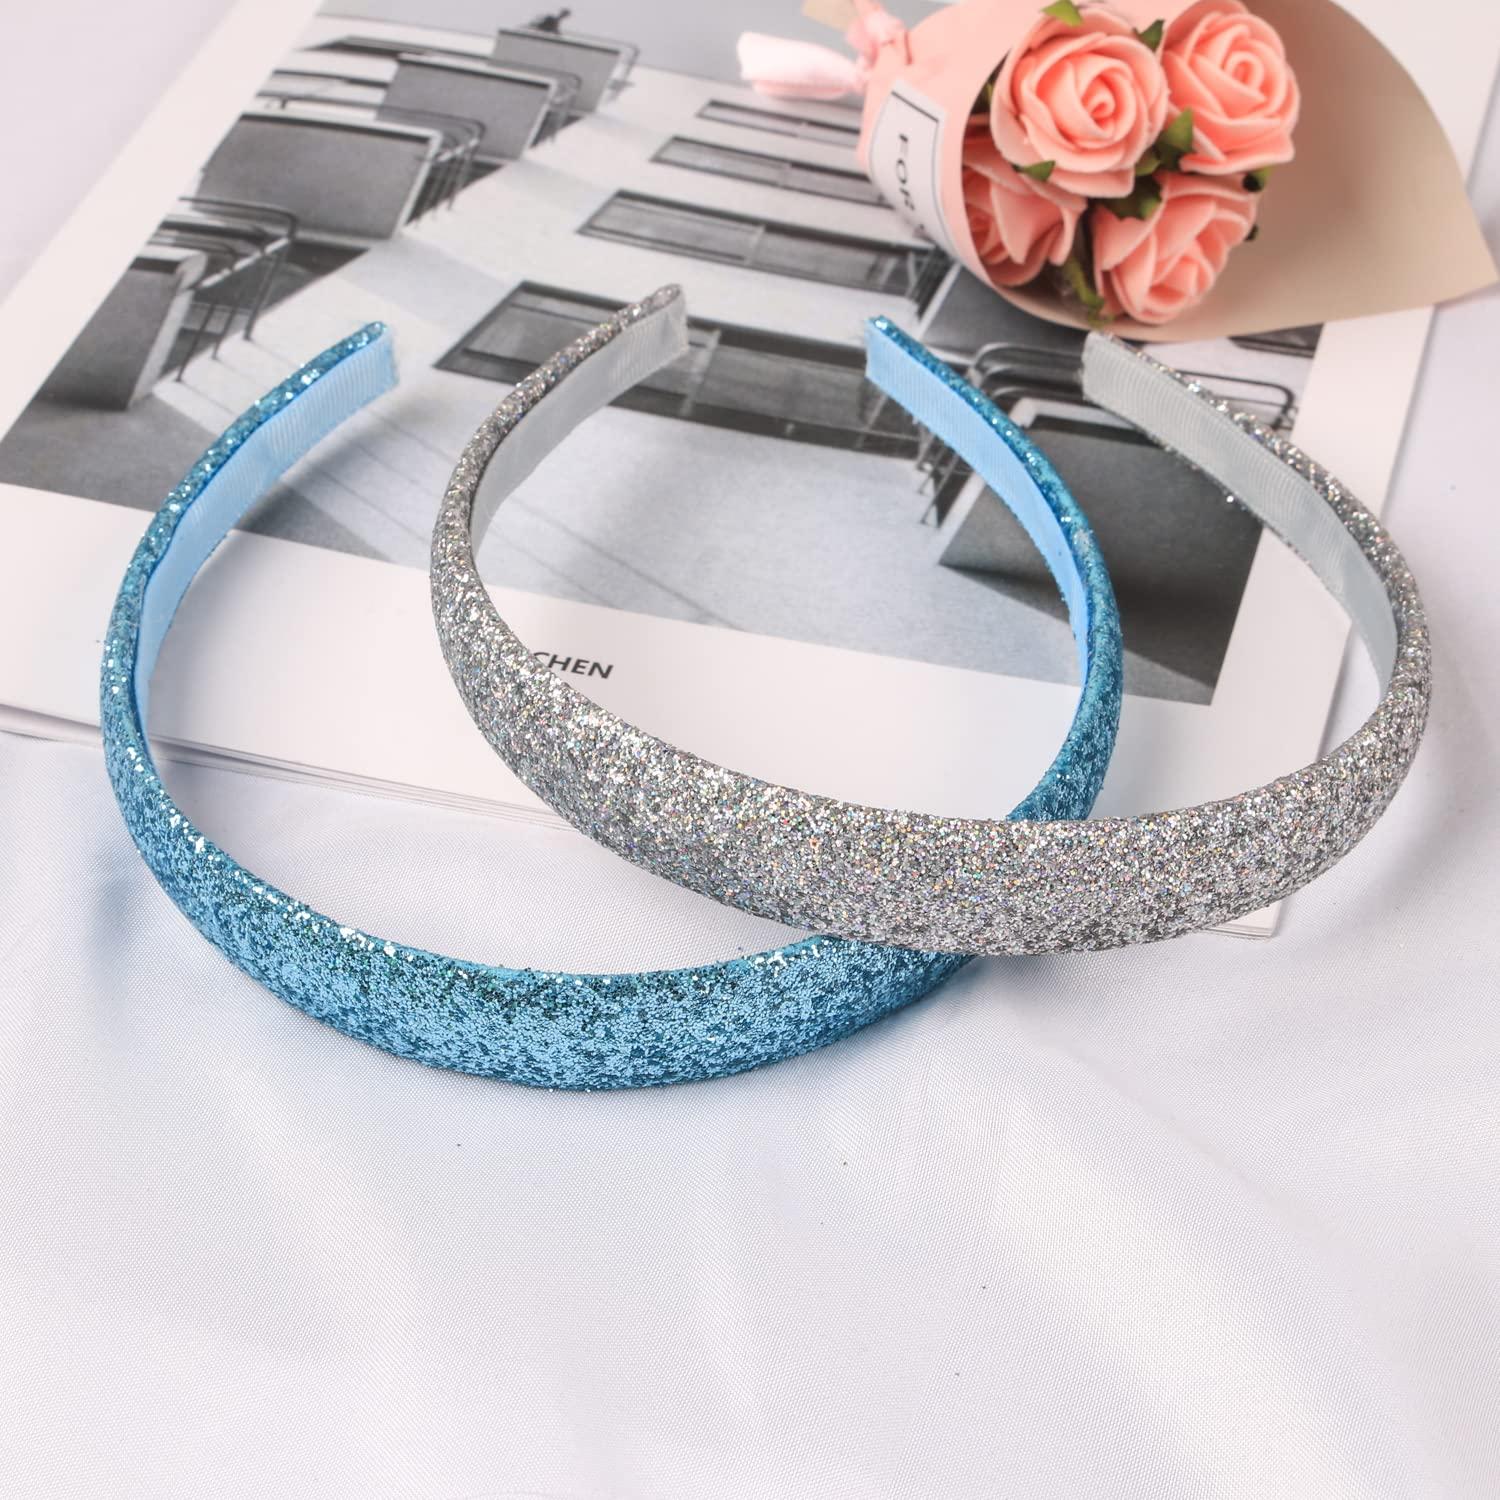 WANYU LIFE 12 Colors Sparkle Plastic Headbands For Girls,Glitter 2 